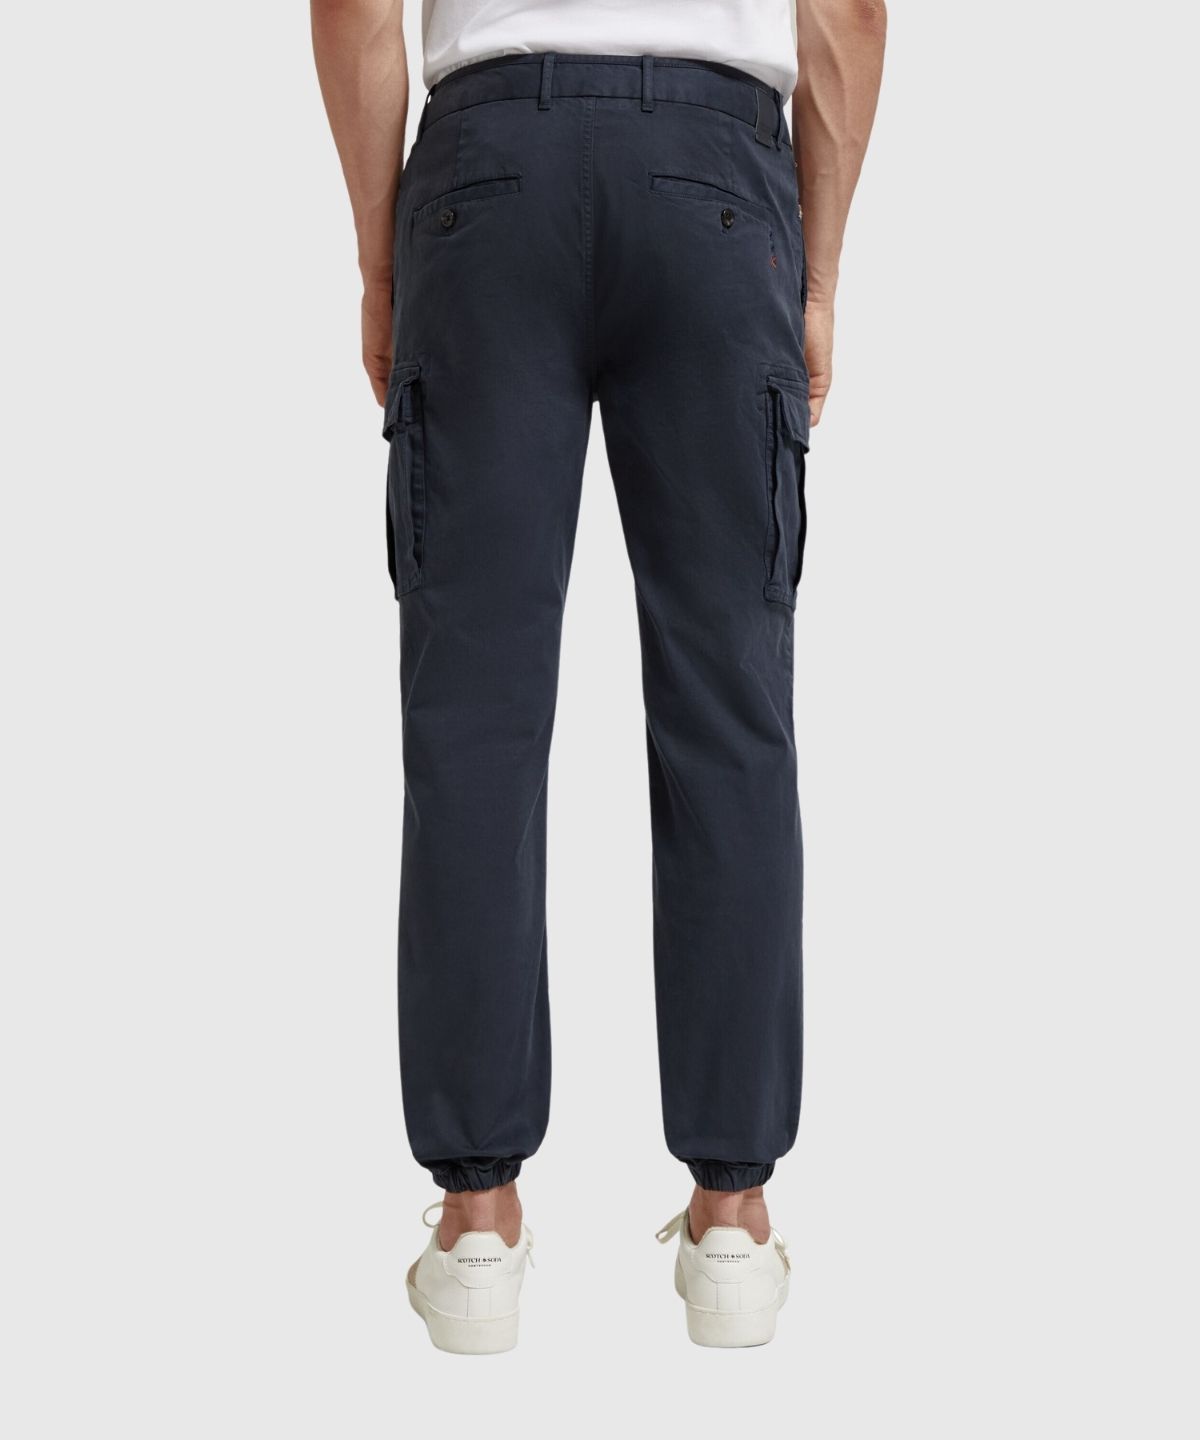 Stuart – Slim-Fit washed structured cargo pants